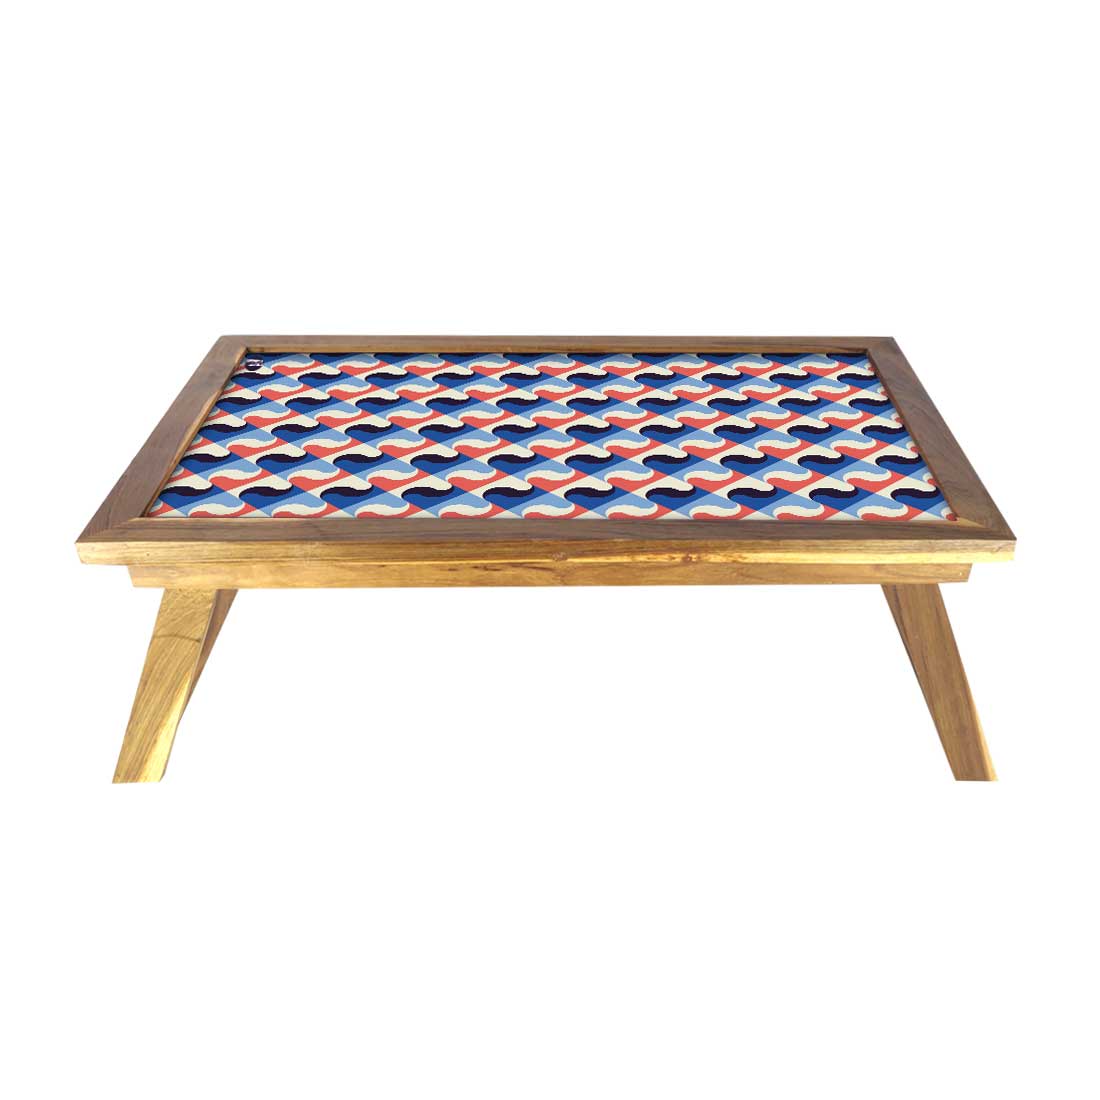 Nutcase Folding Laptop Table For Home Bed Lapdesk Breakfast Table Foldable Teak Wooden Study Desk - Retro Pattern Nutcase